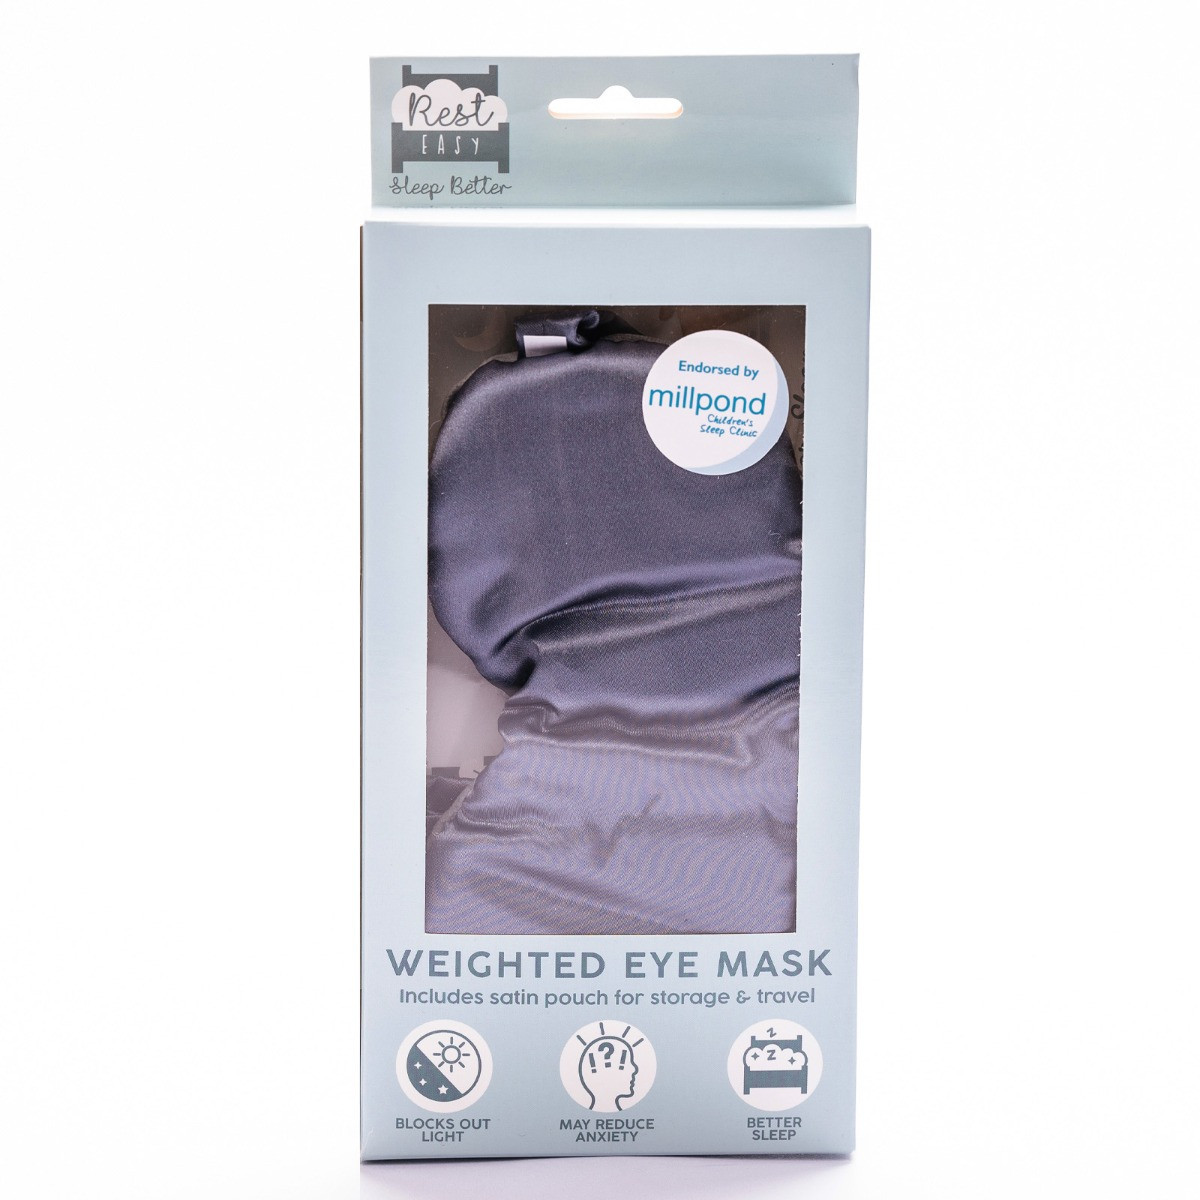 Rest Easy Sleep Better Weighted Eye Mask>